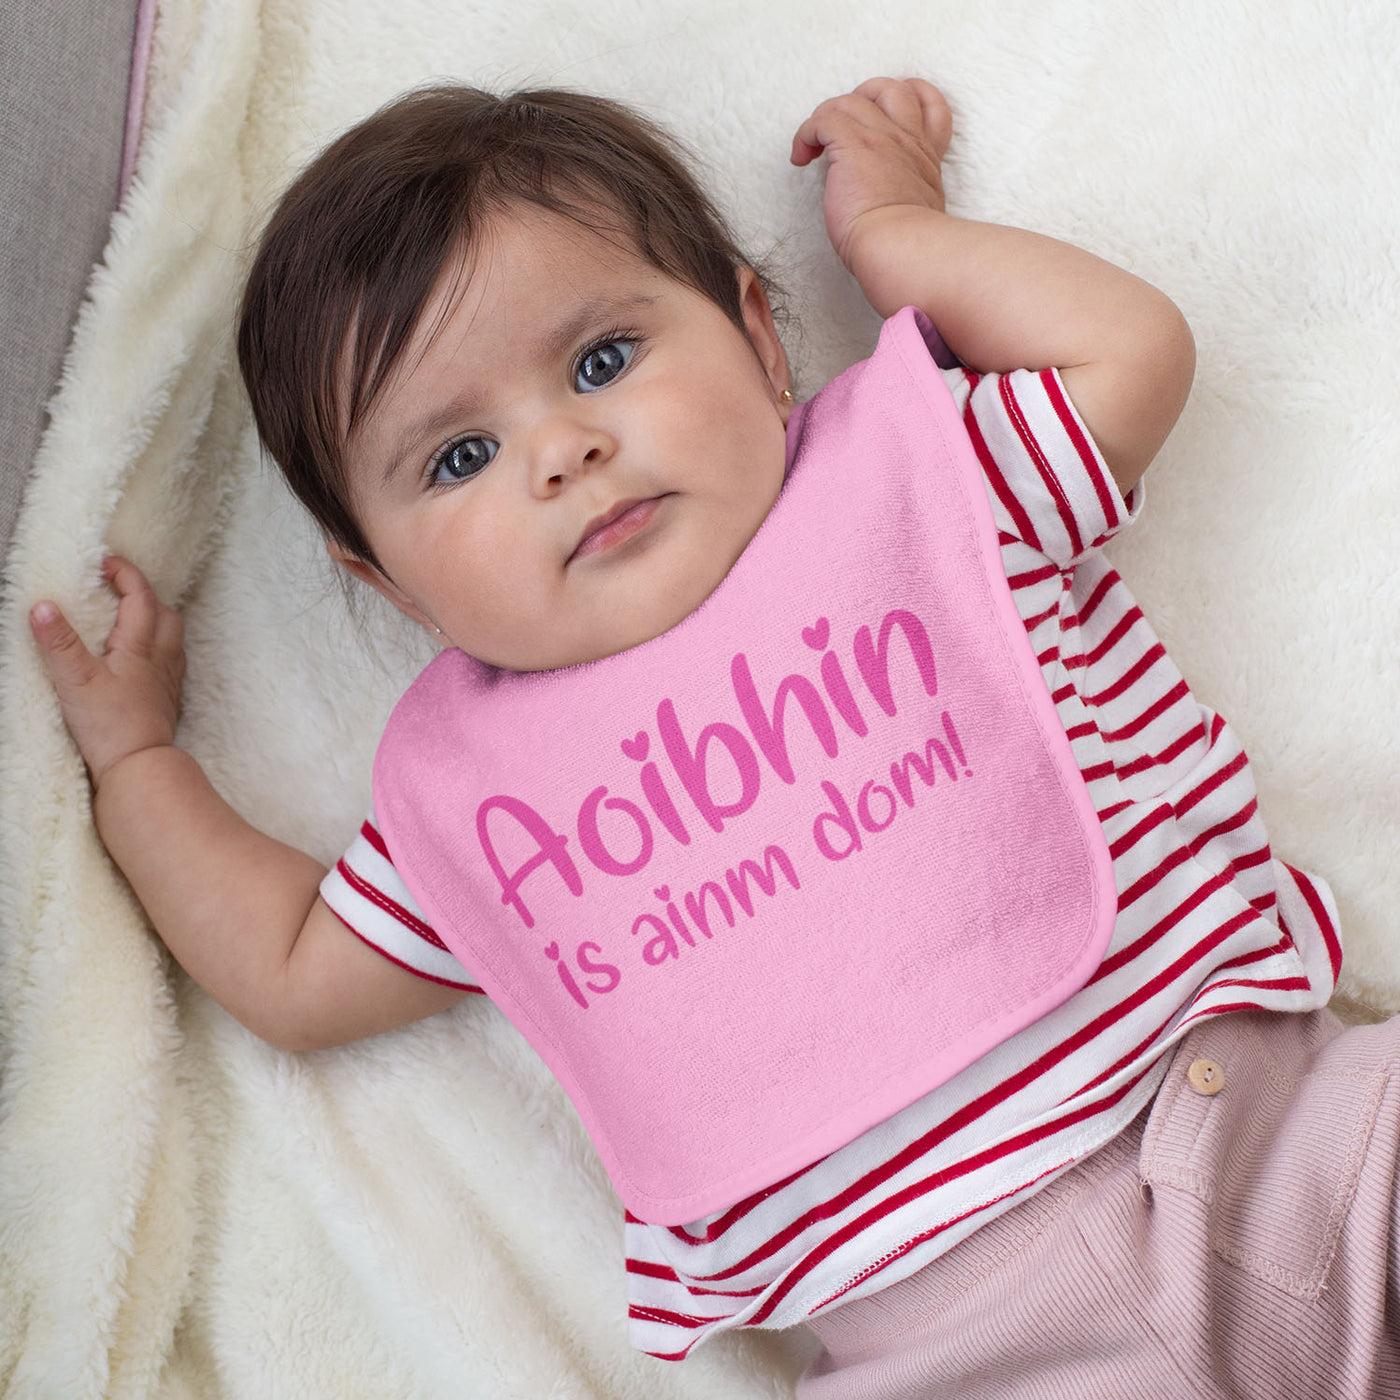 Personalised Pink Baby Bib - is ainm dom! - WowWee.ie Personalised Gifts